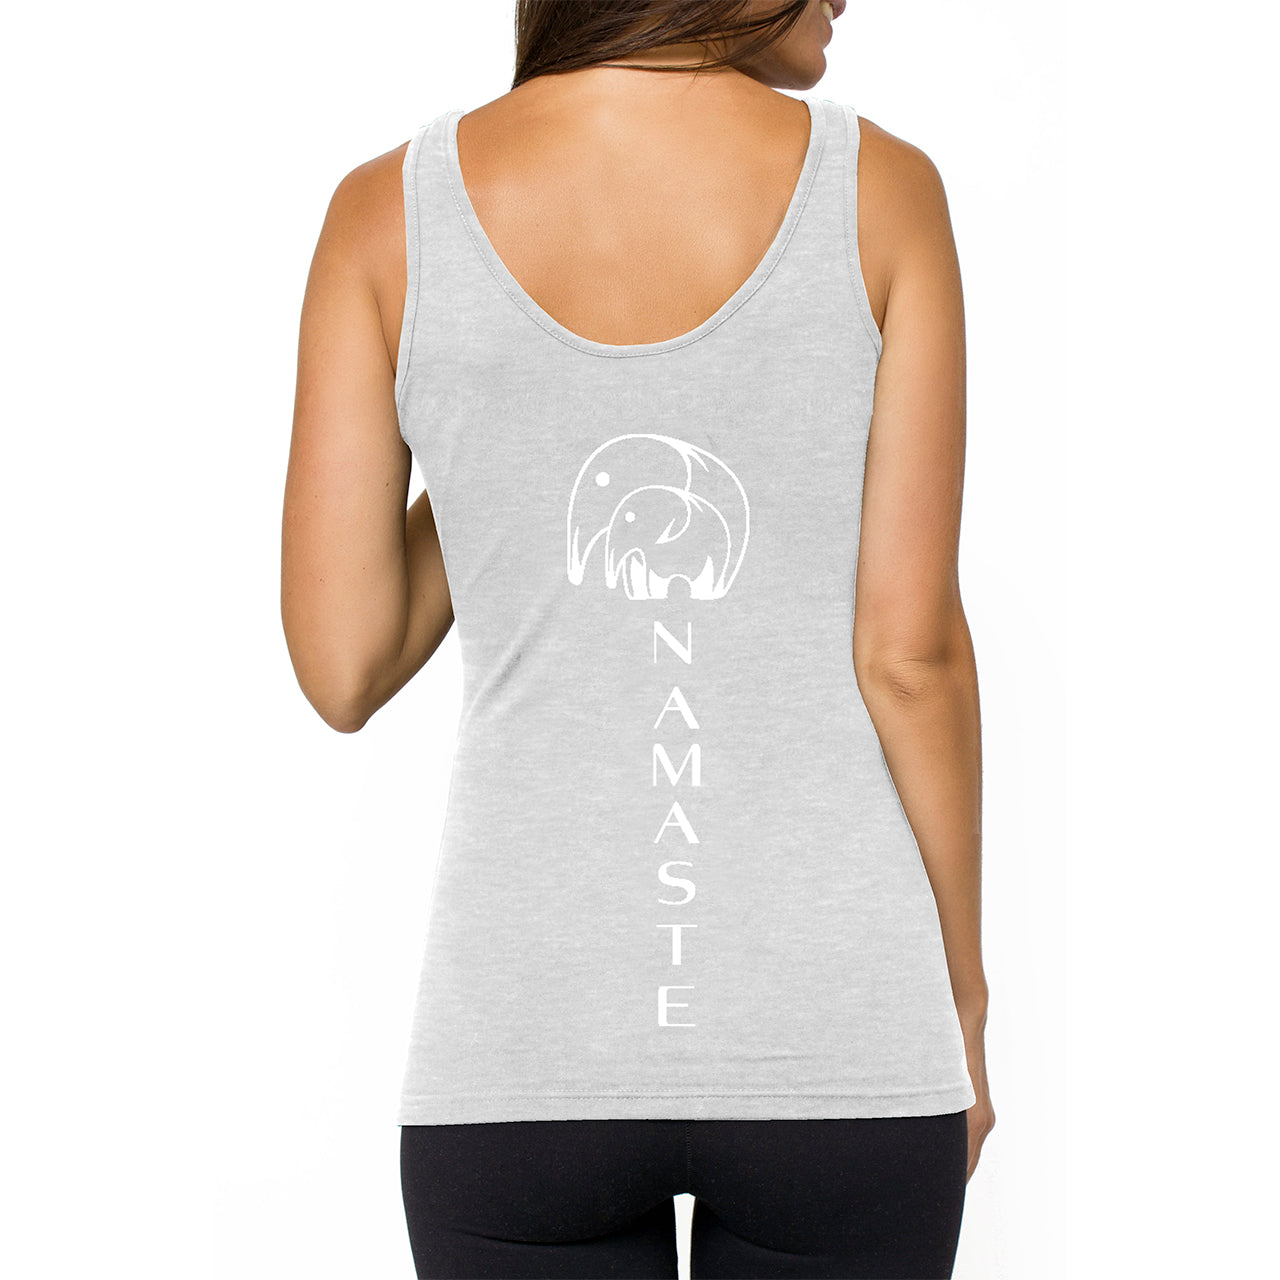 Womens Yoga Tank Tops & Sleeveless Shirts.